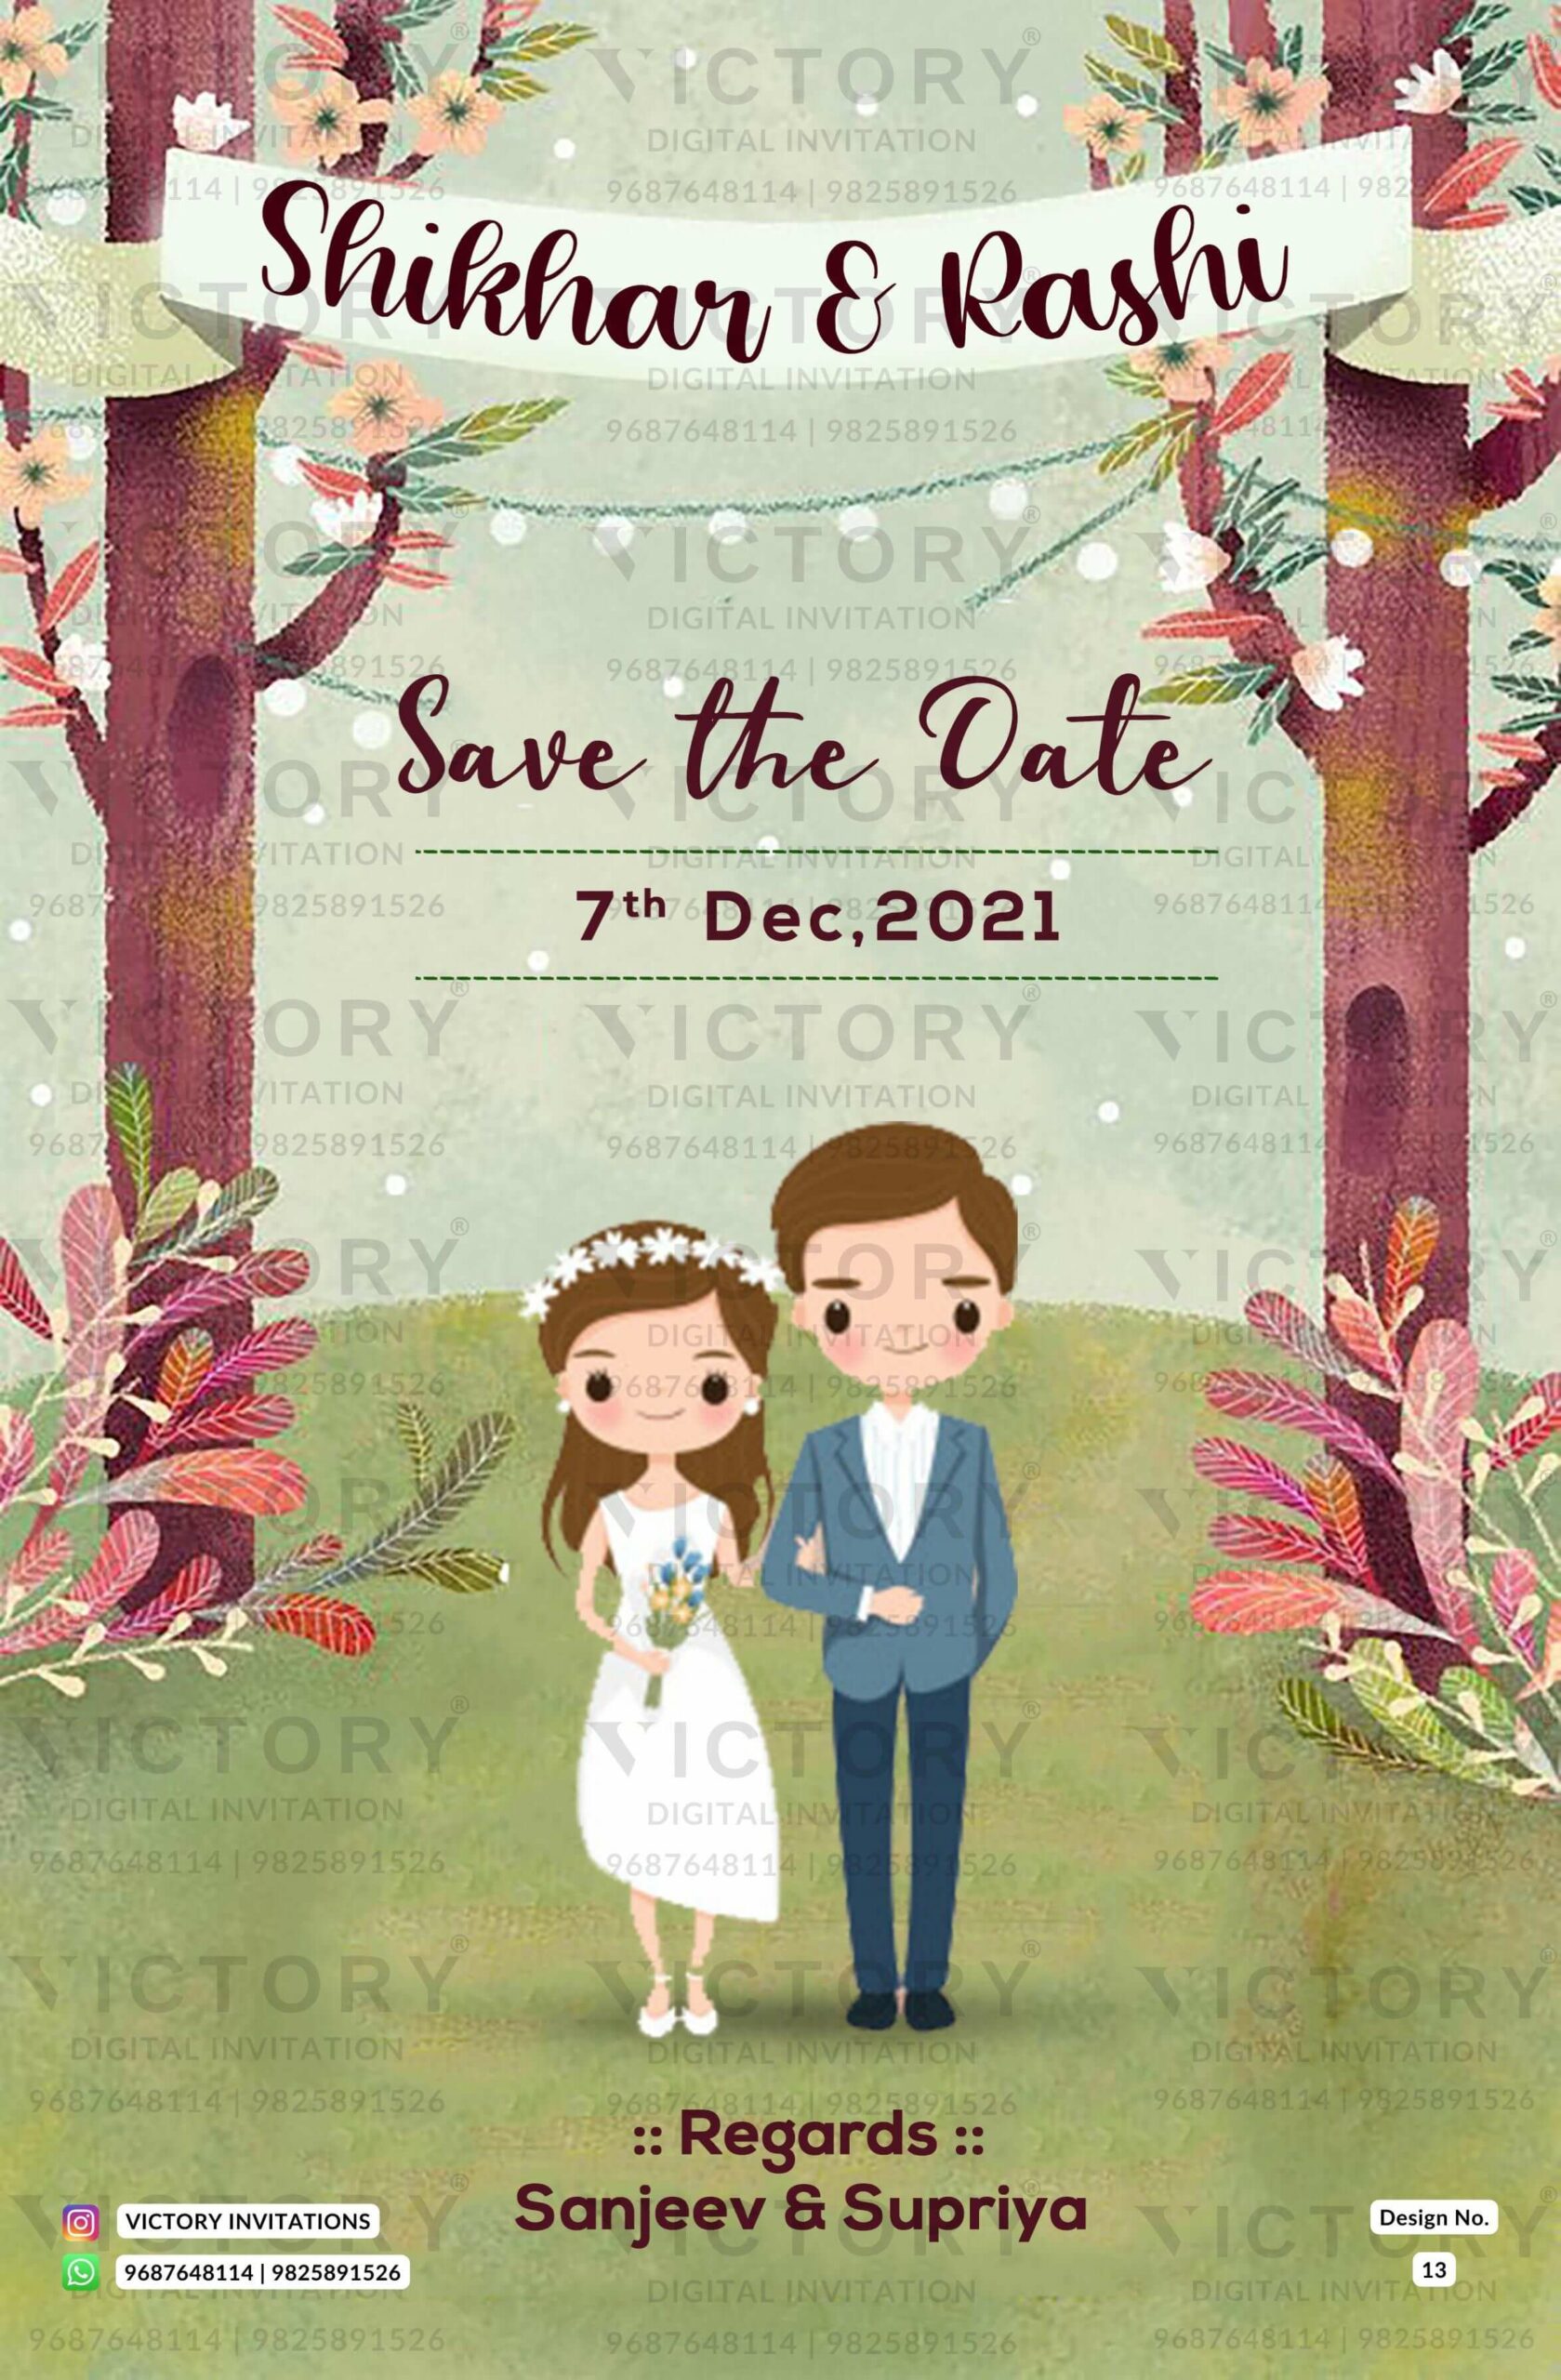 Save the Date digital invitation card design no.13